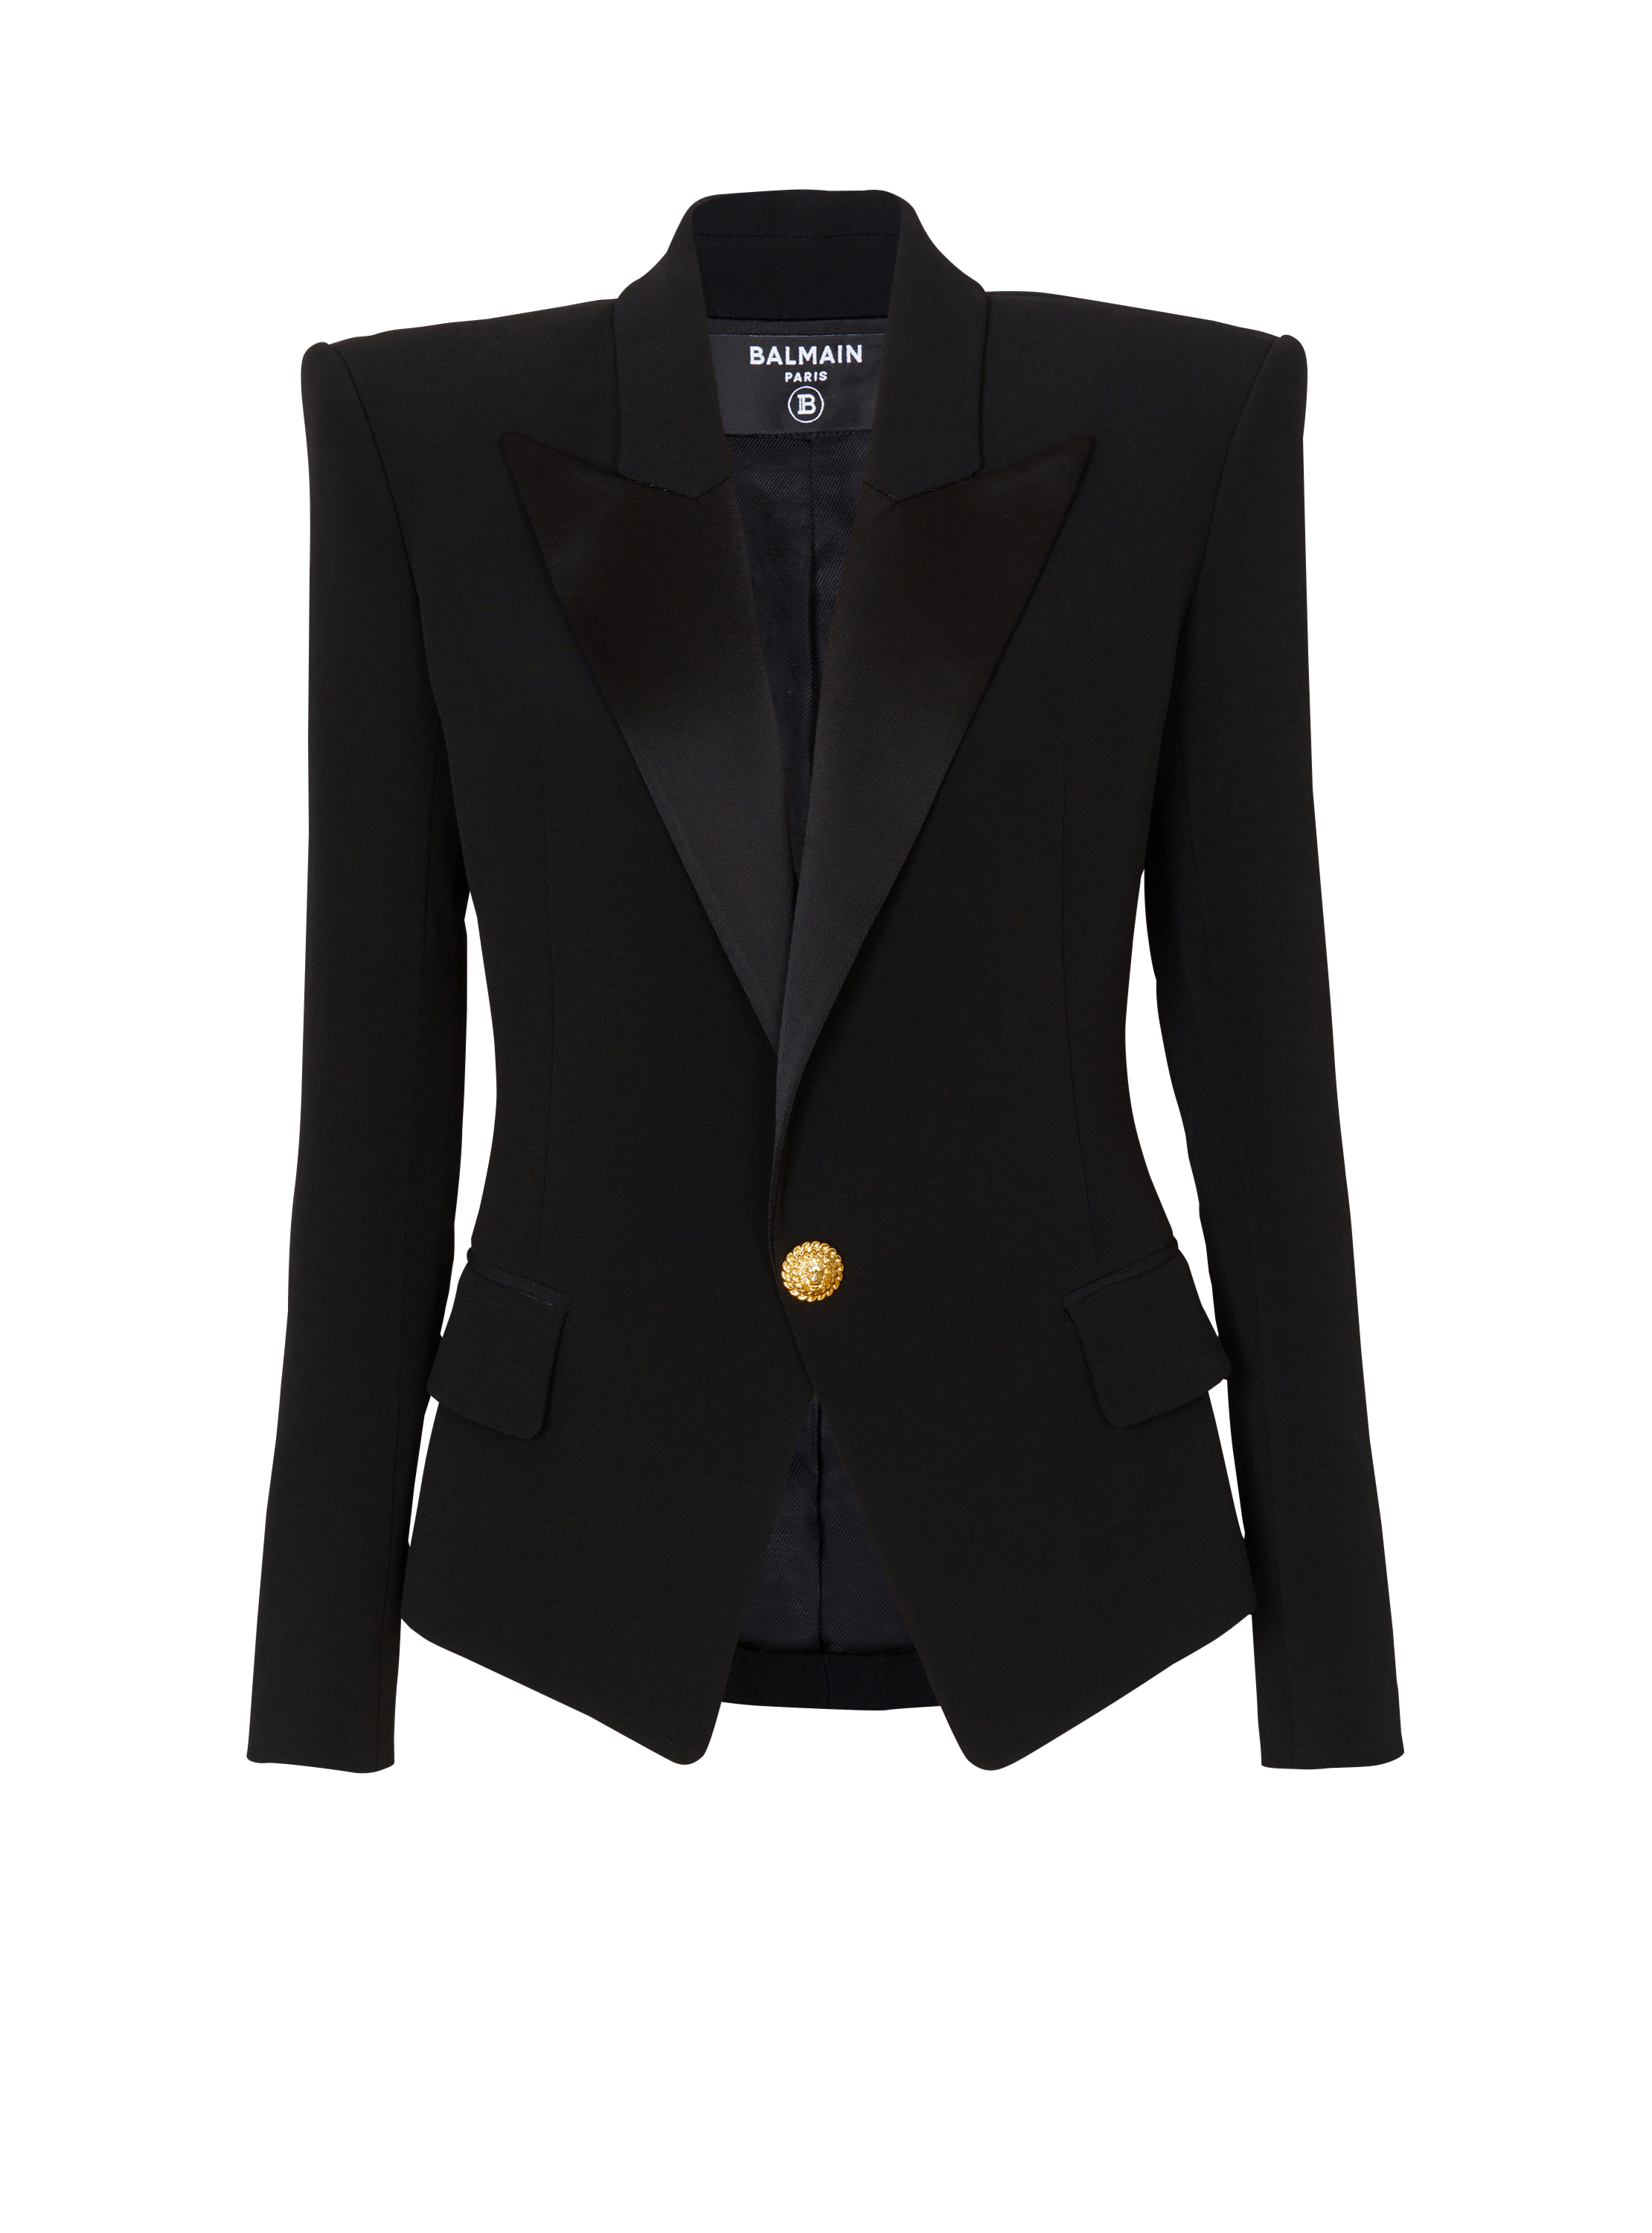 1-button crepe jacket, black, hi-res